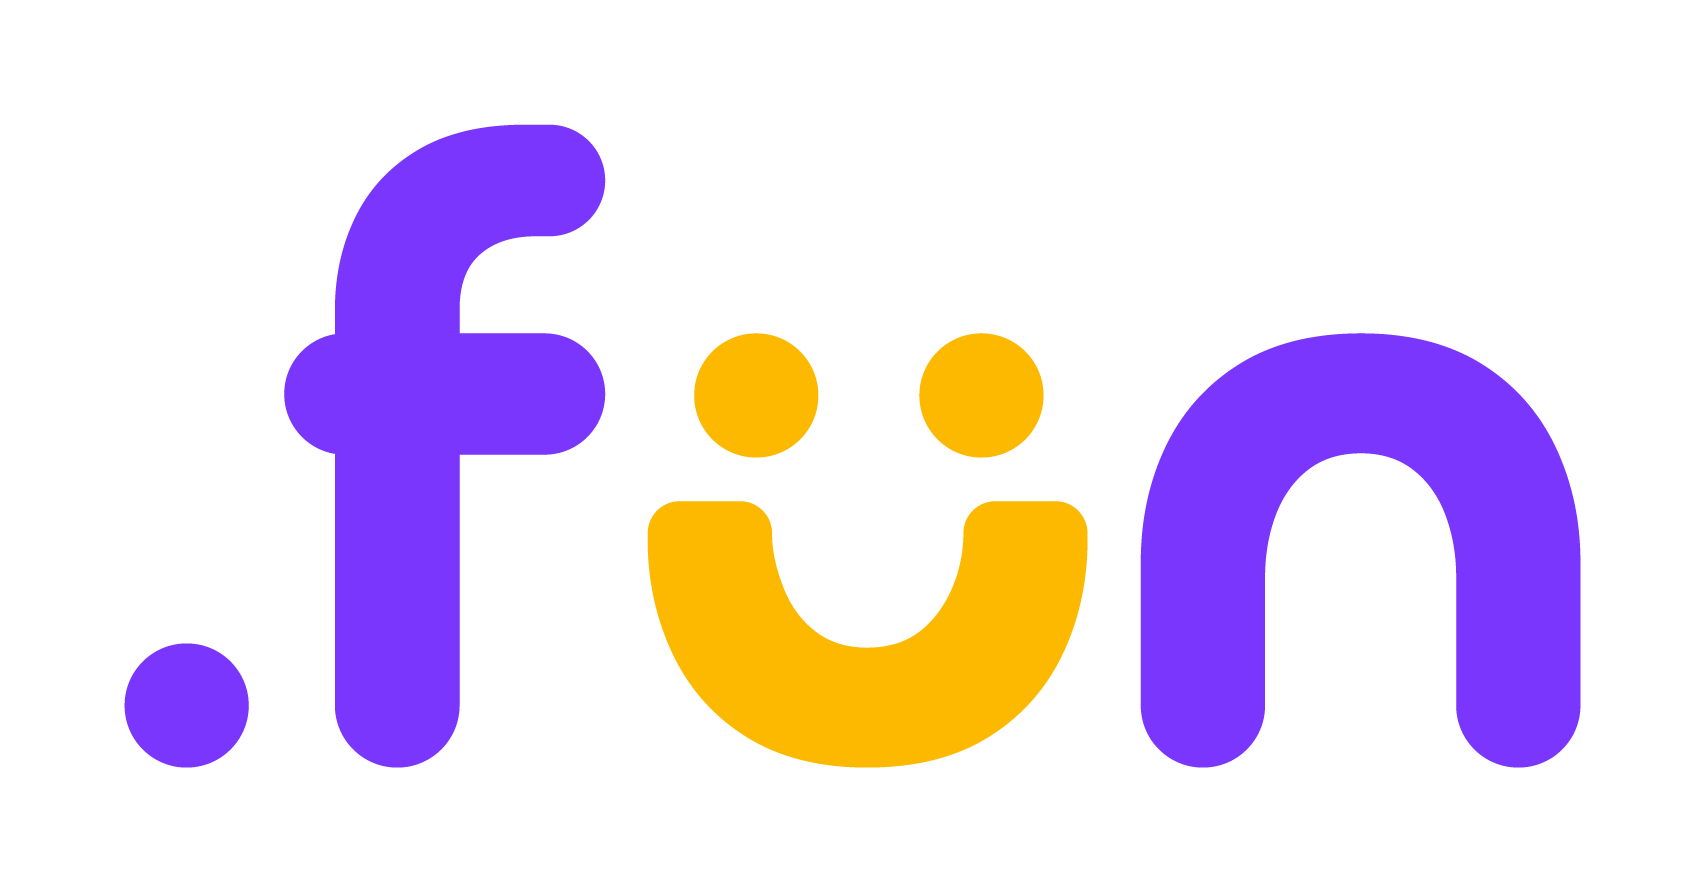 .fun domain extension | .fun domain name